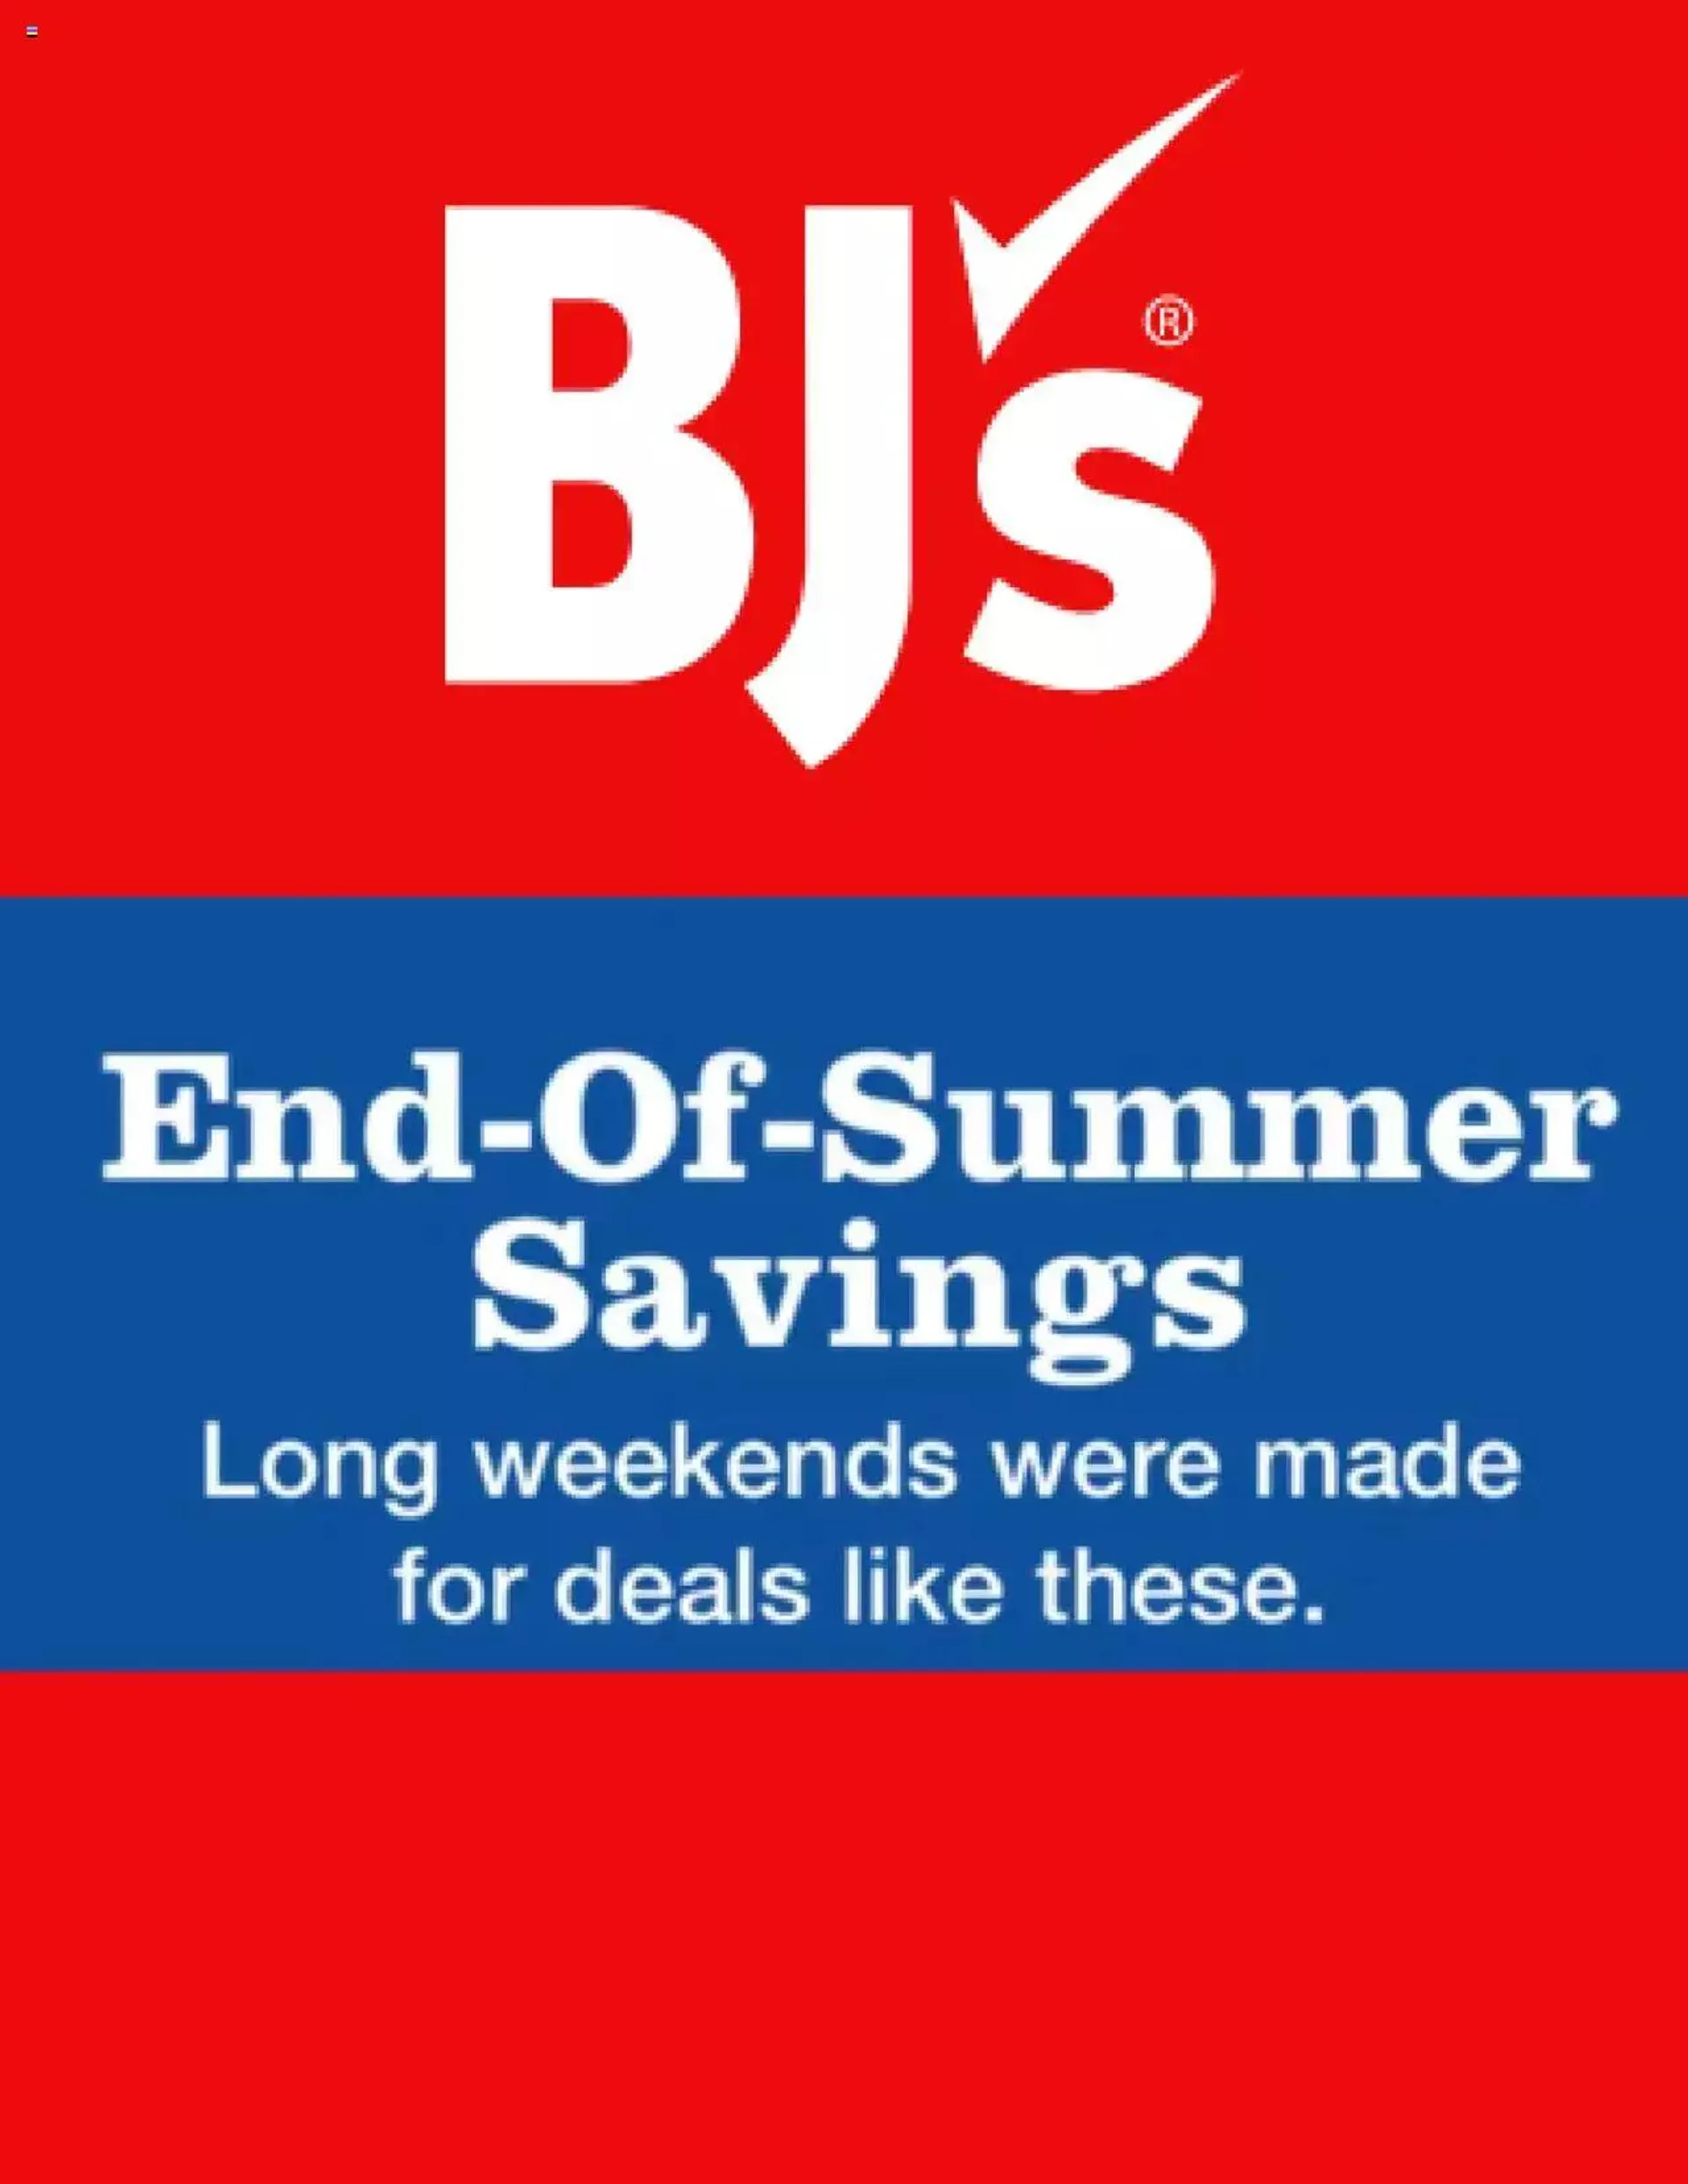 BJs - Weekly Ad - 0